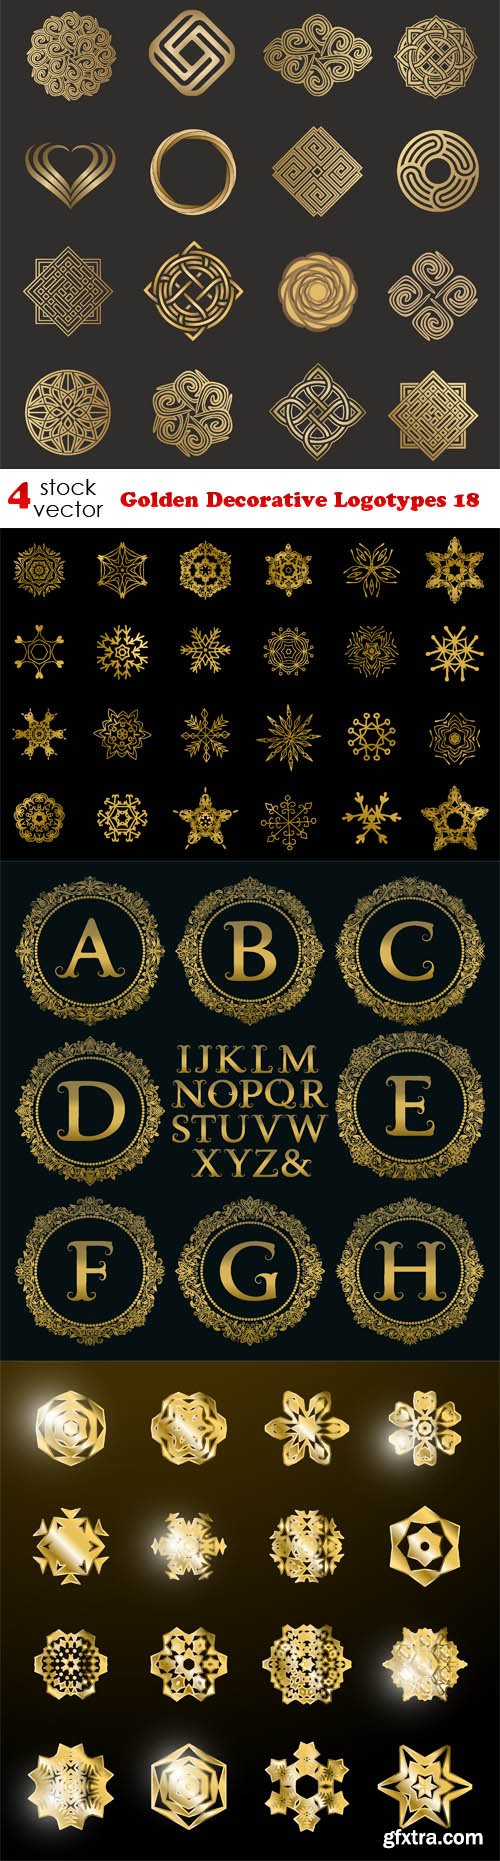 Vectors - Golden Decorative Logotypes 18